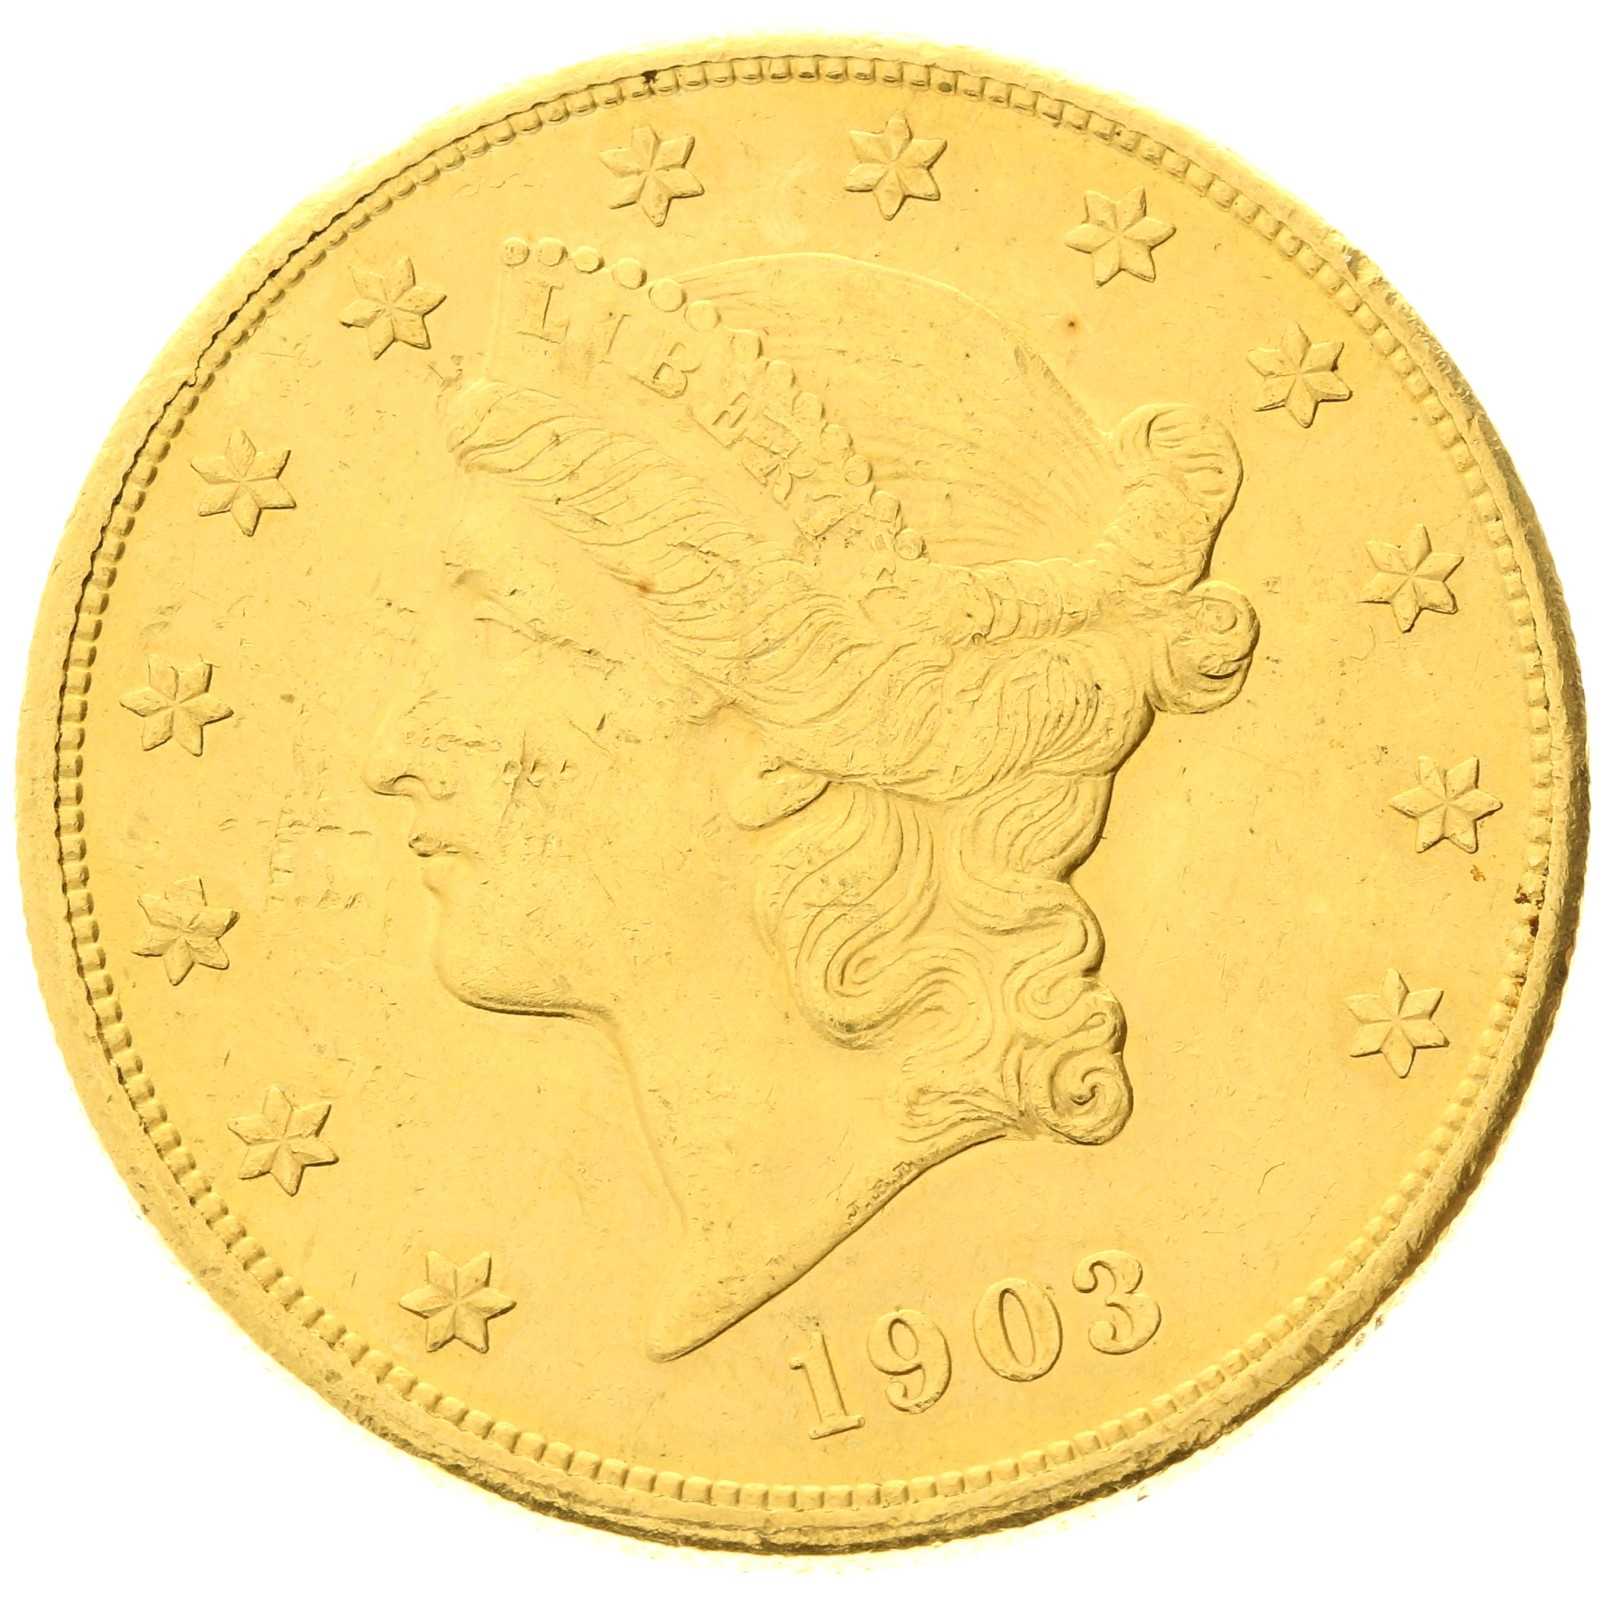 USA - 20 dollars - 1903 -S -  Liberty Head